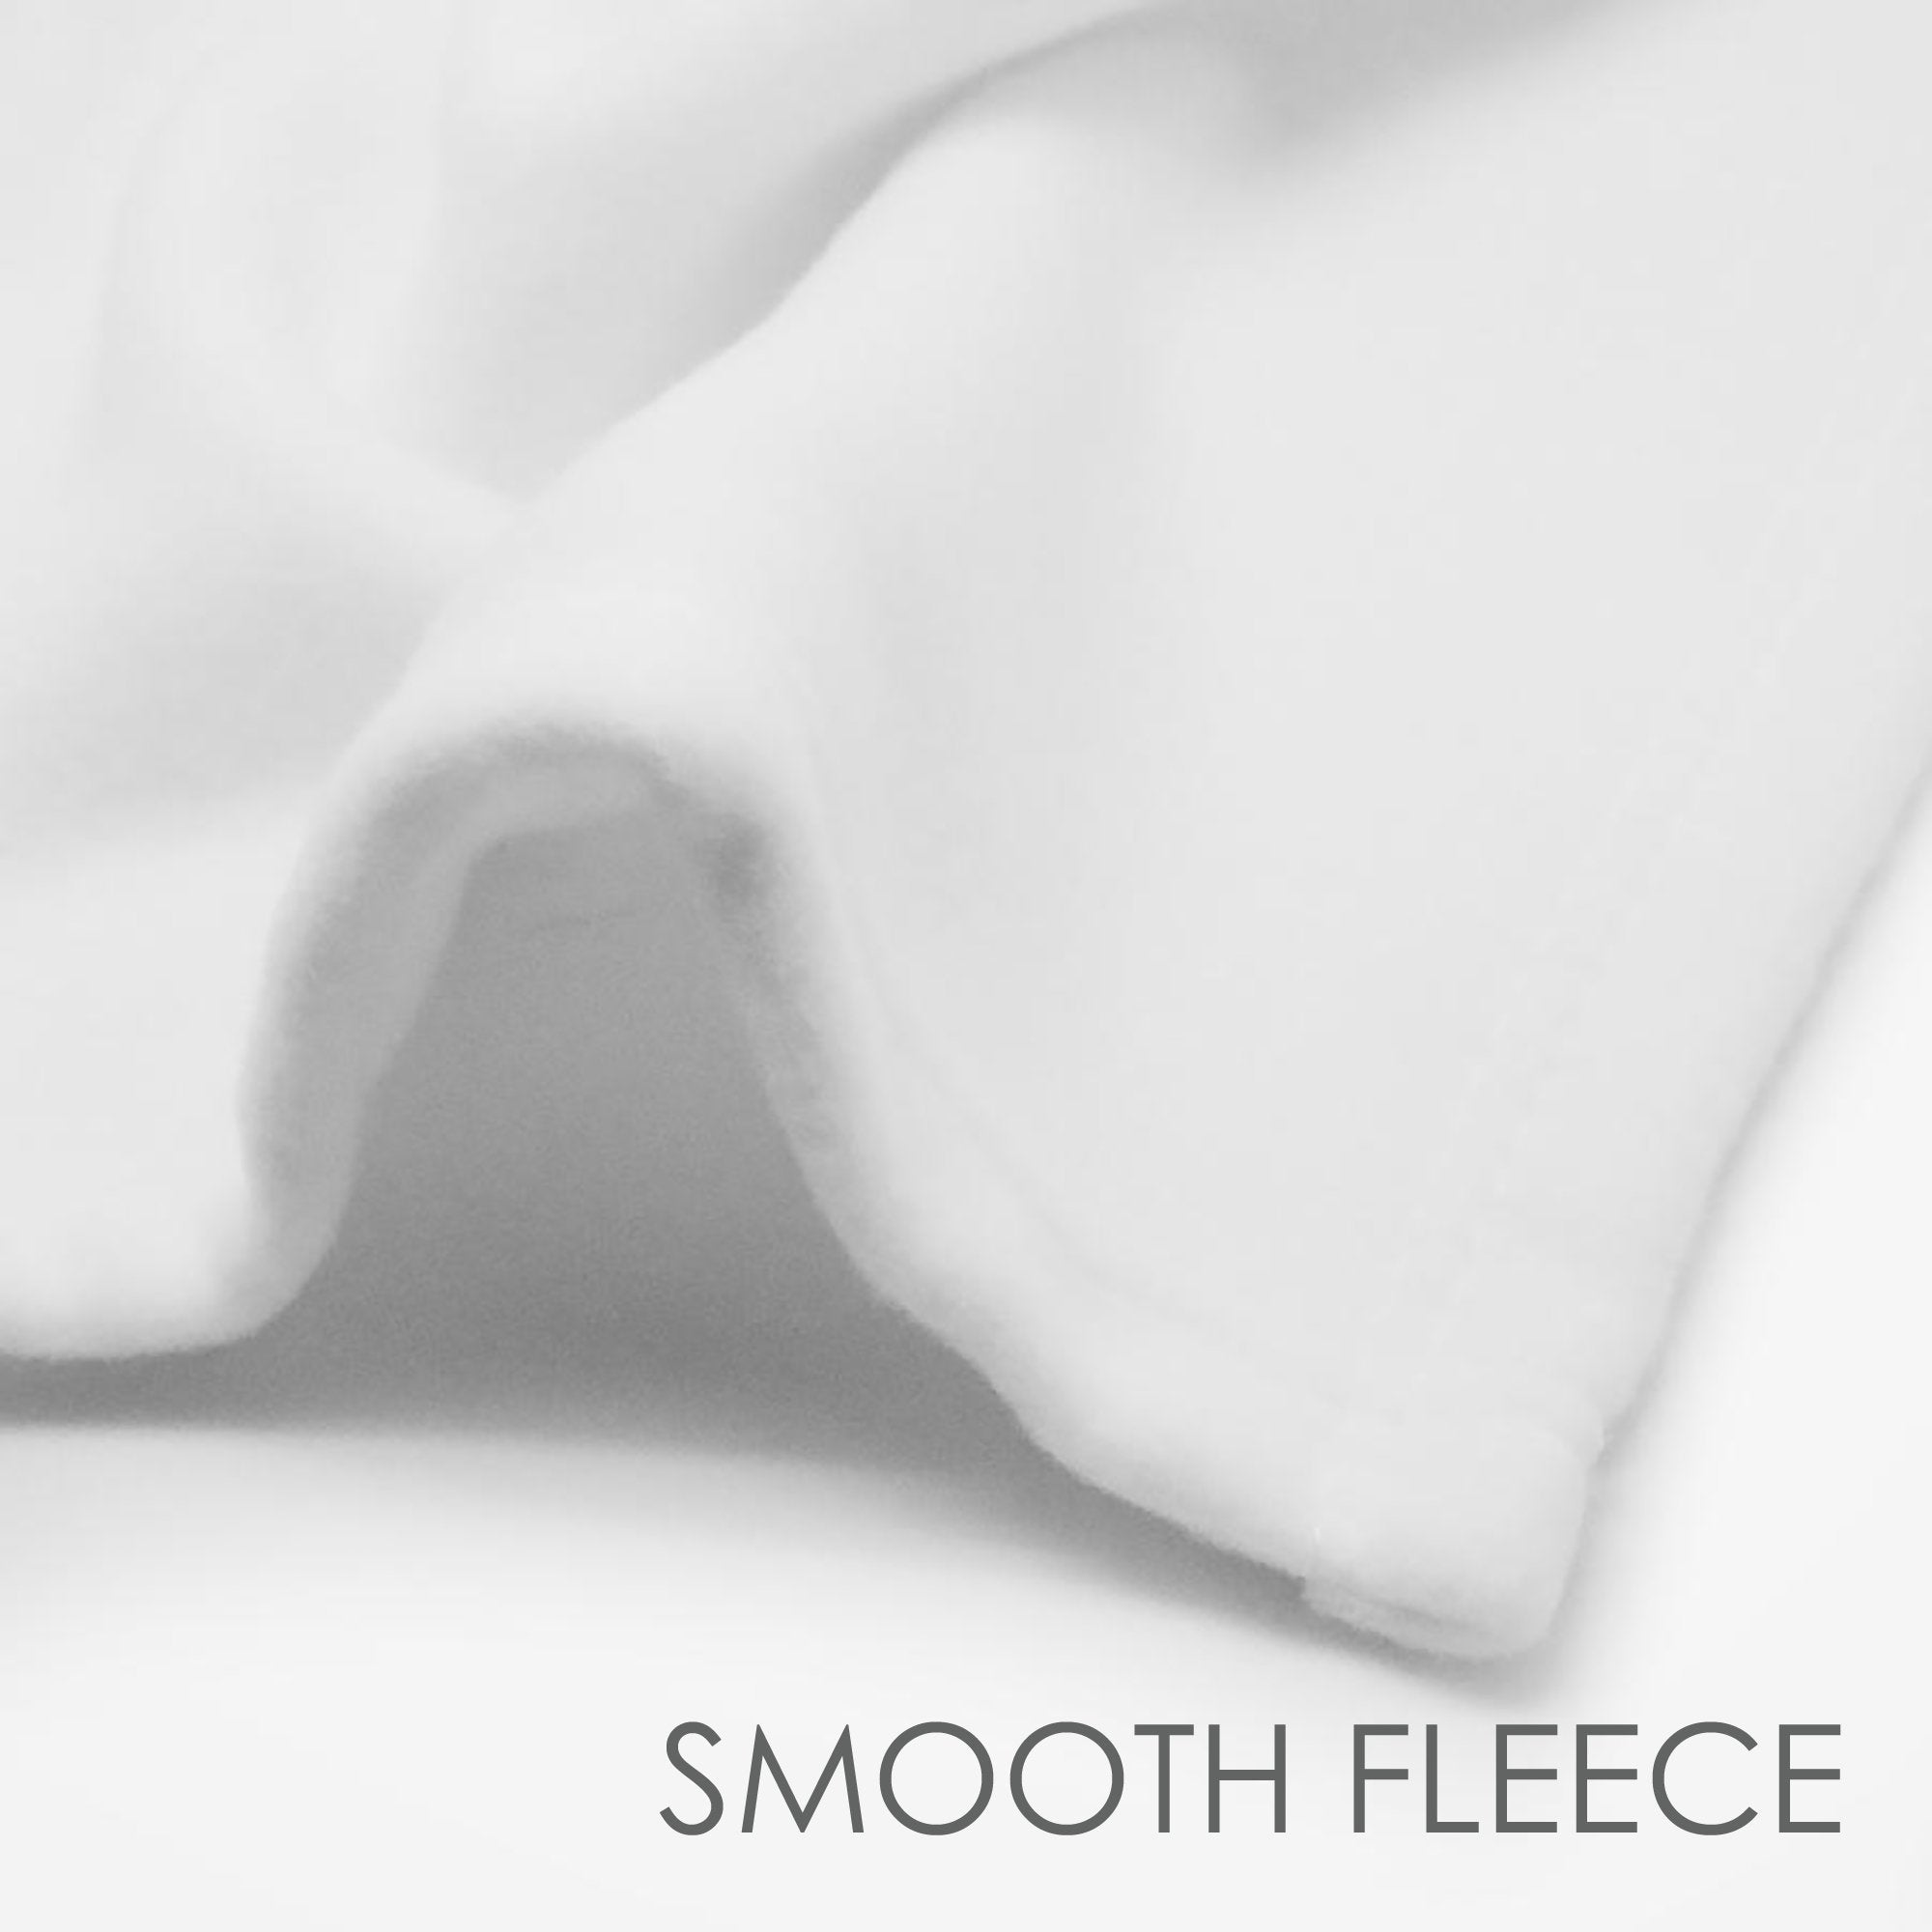 Smooth fleece Milestone Blanket | Pipsy.com